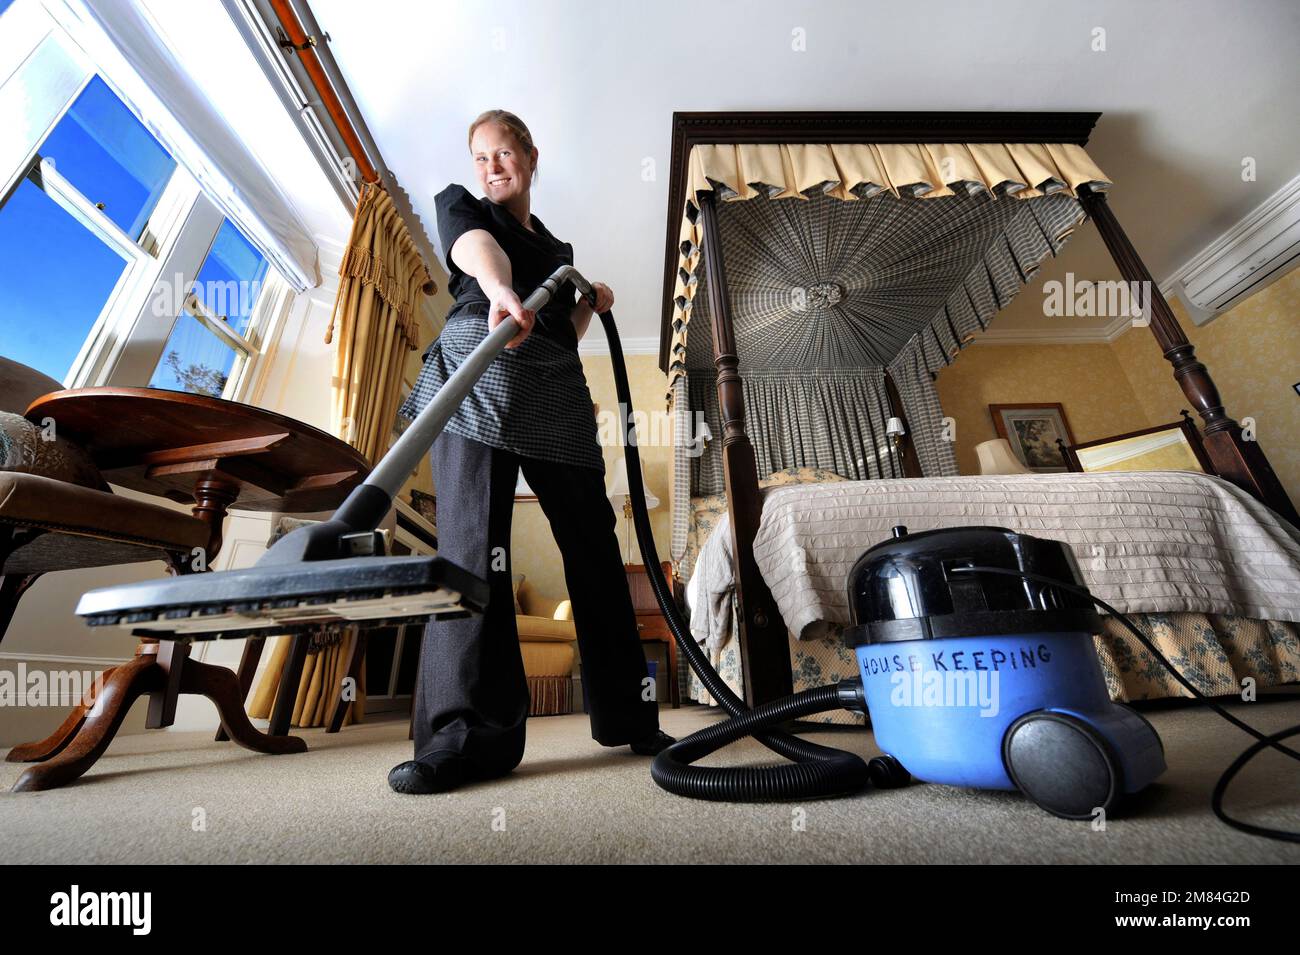 A Housekeeper preparing a hotel room. Stock Photo